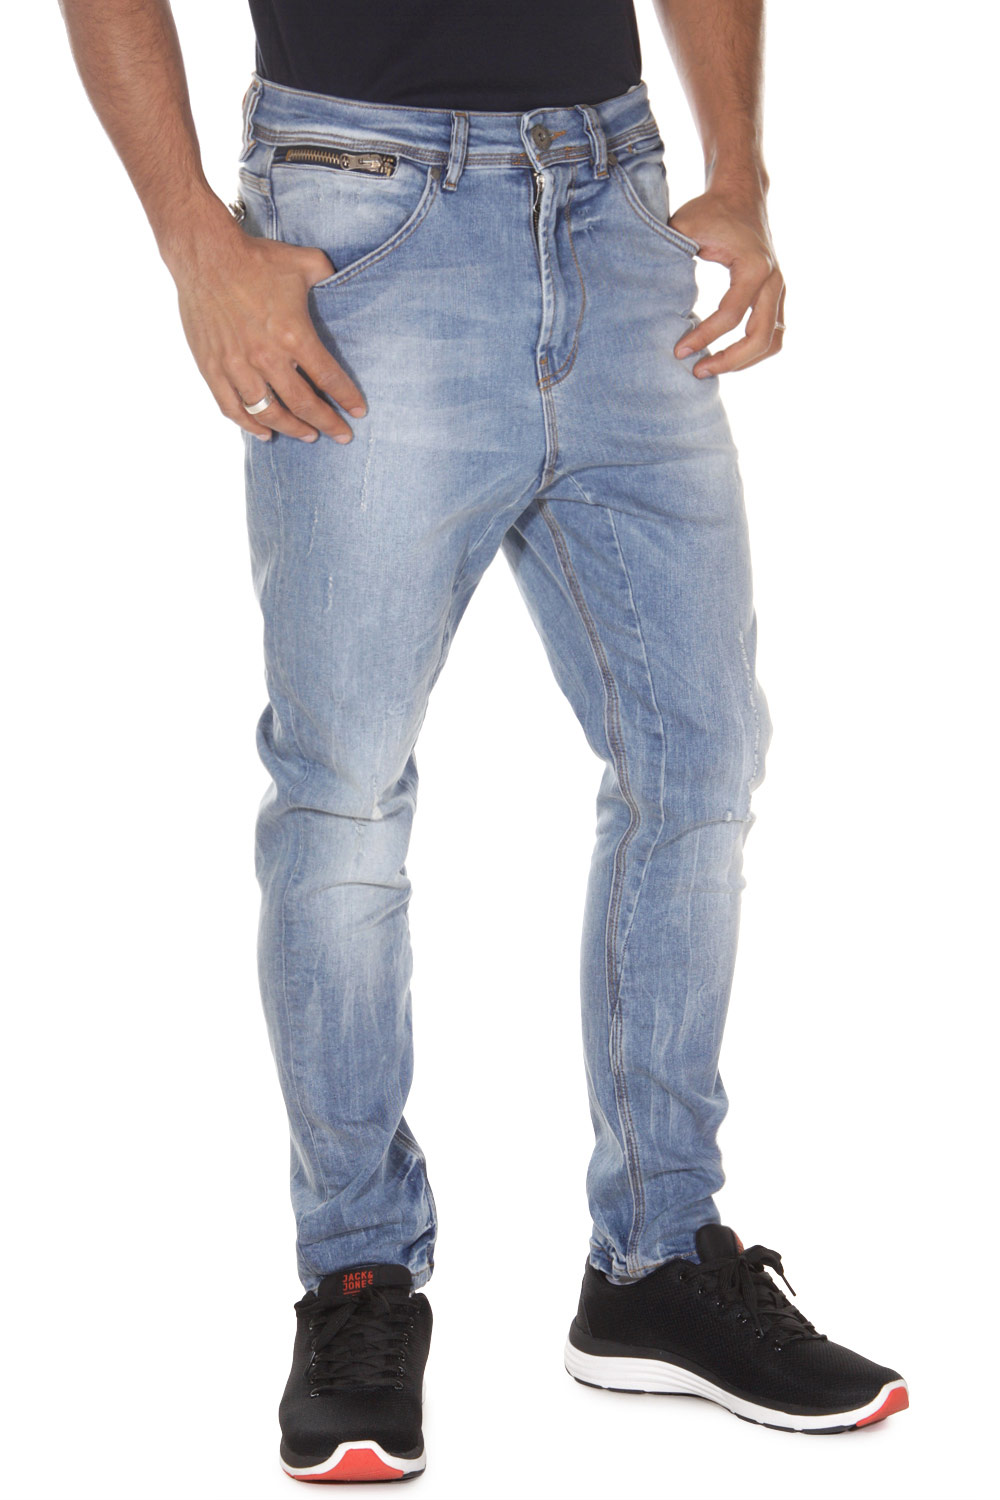 VSCT jeans at oboy.com